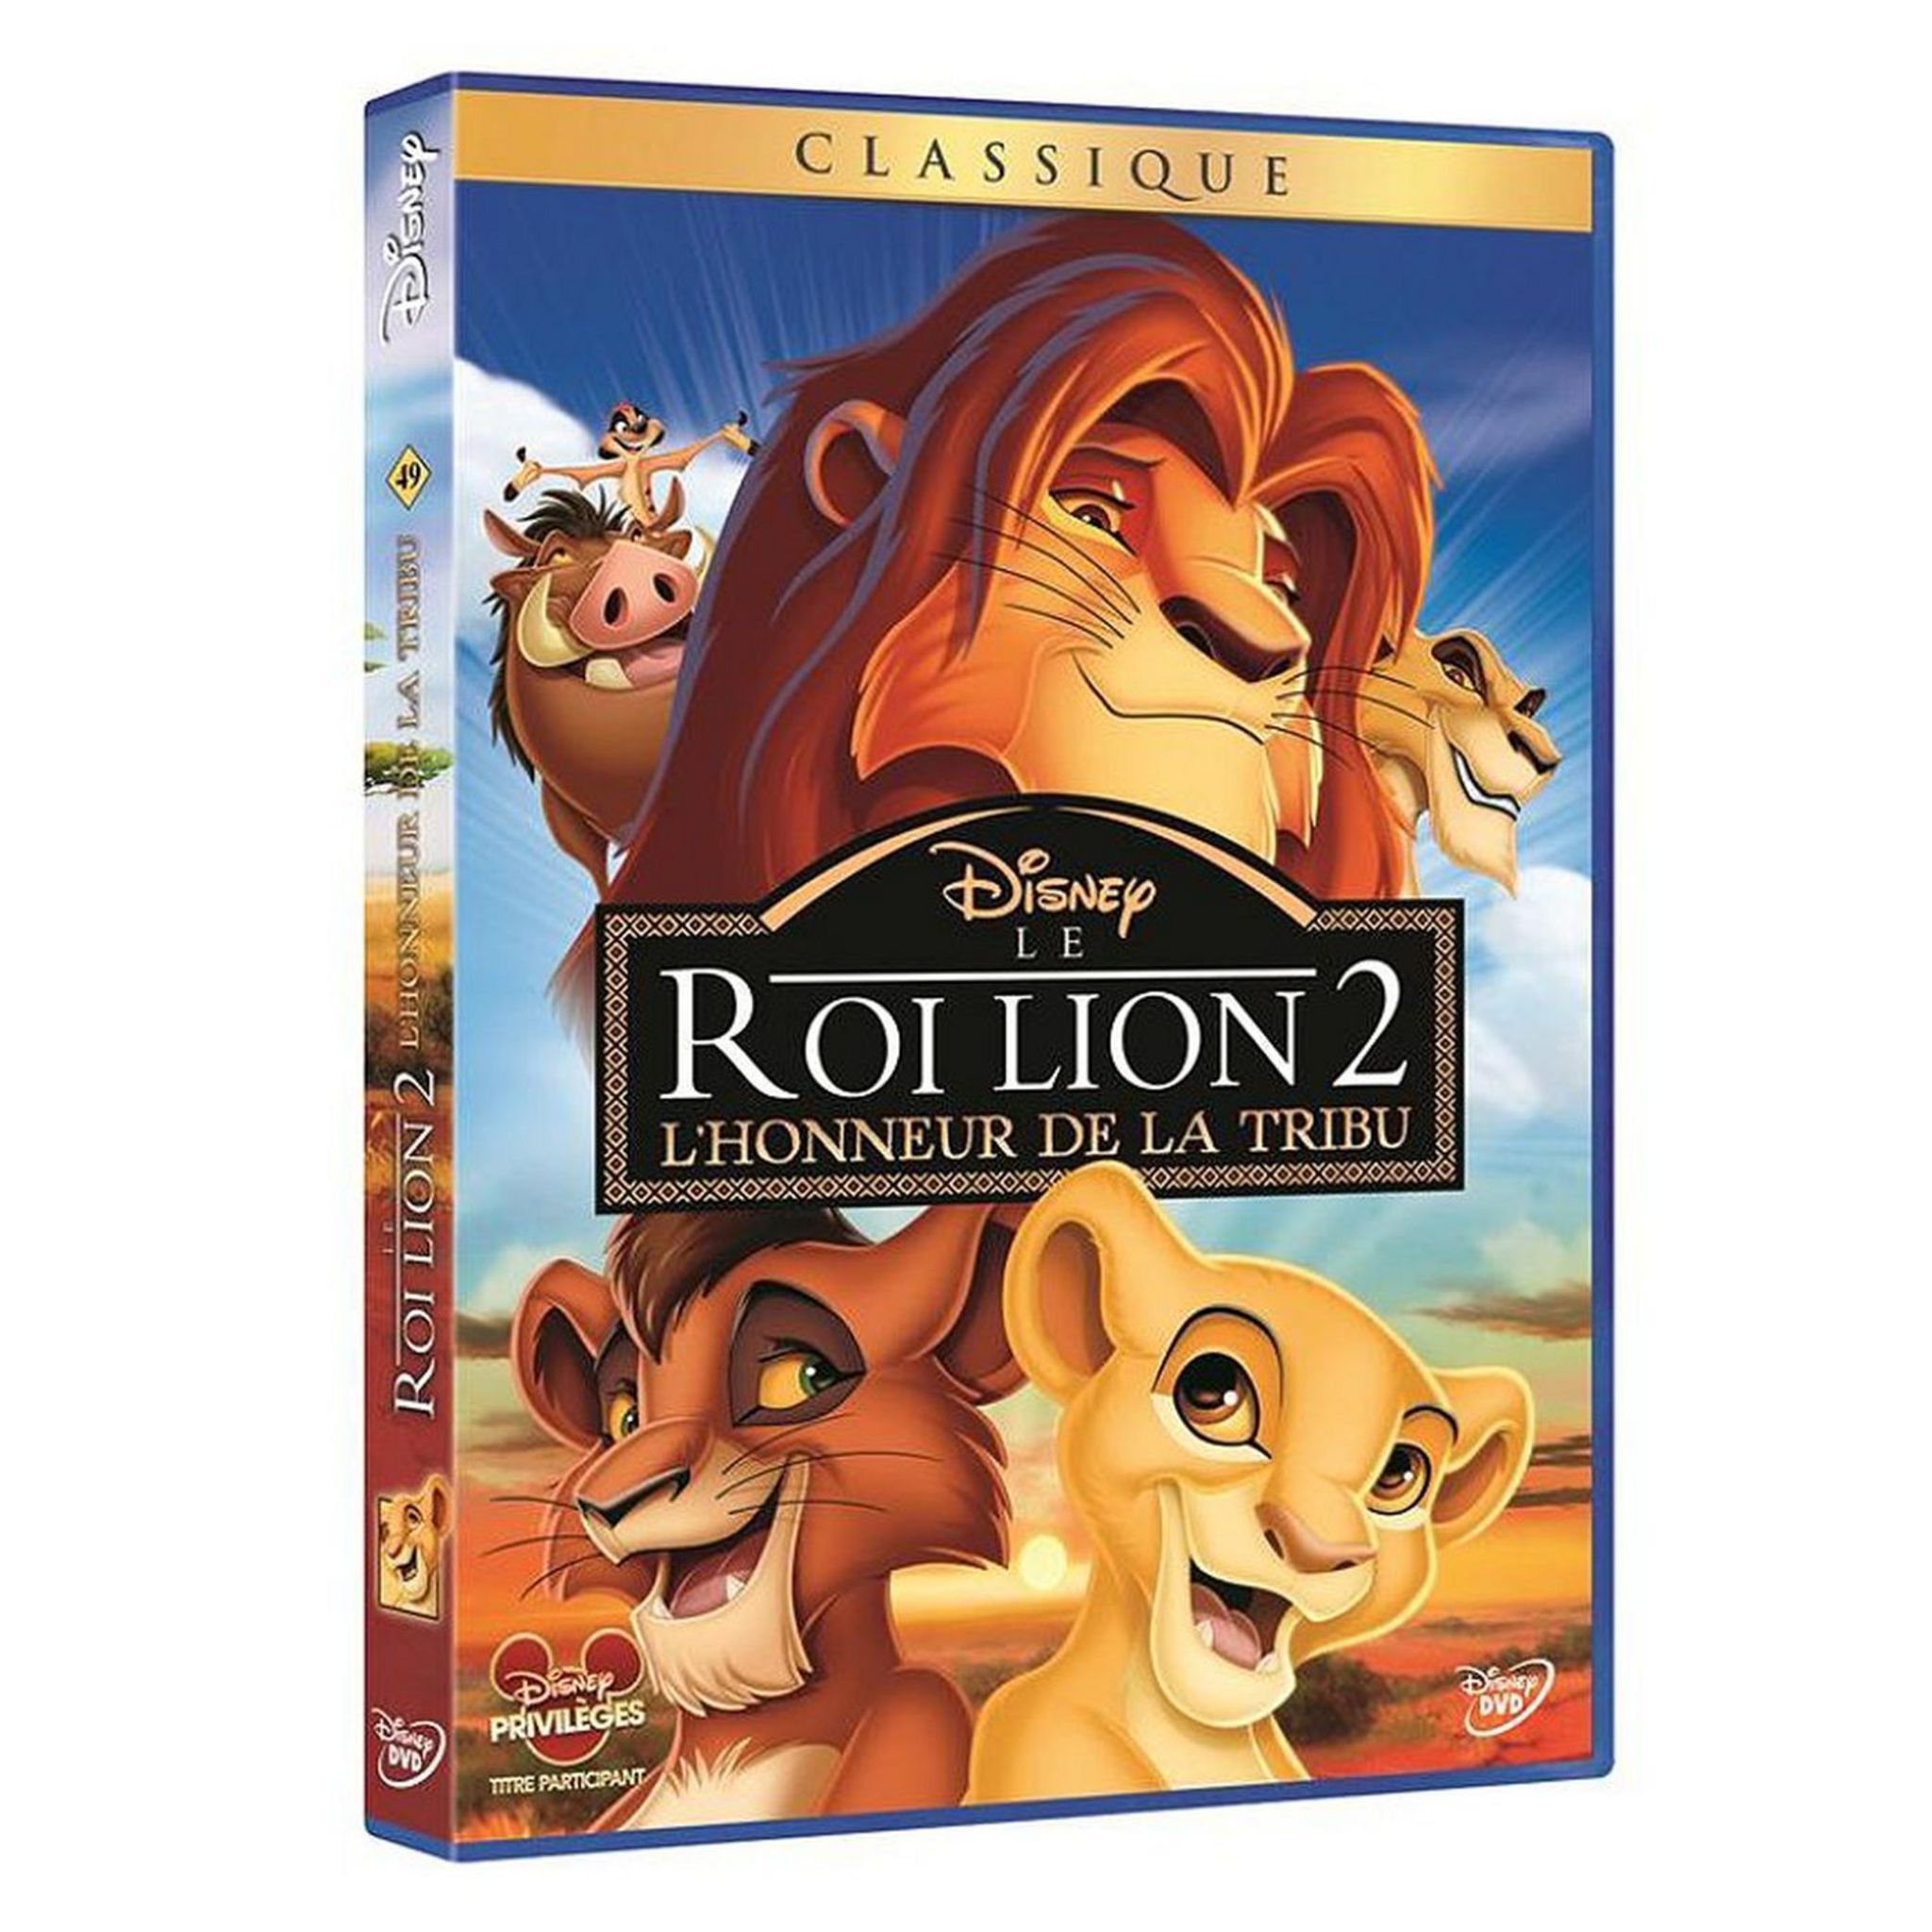 Новую игру симба. The Lion King 2 Simba's Pride DVD. Обложка the Lion King 2 Simba s Pride. The Lion King 2 Simba's Pride DVD menu Walkthrough. The Lion King II: Simba's Pride DVD menu.